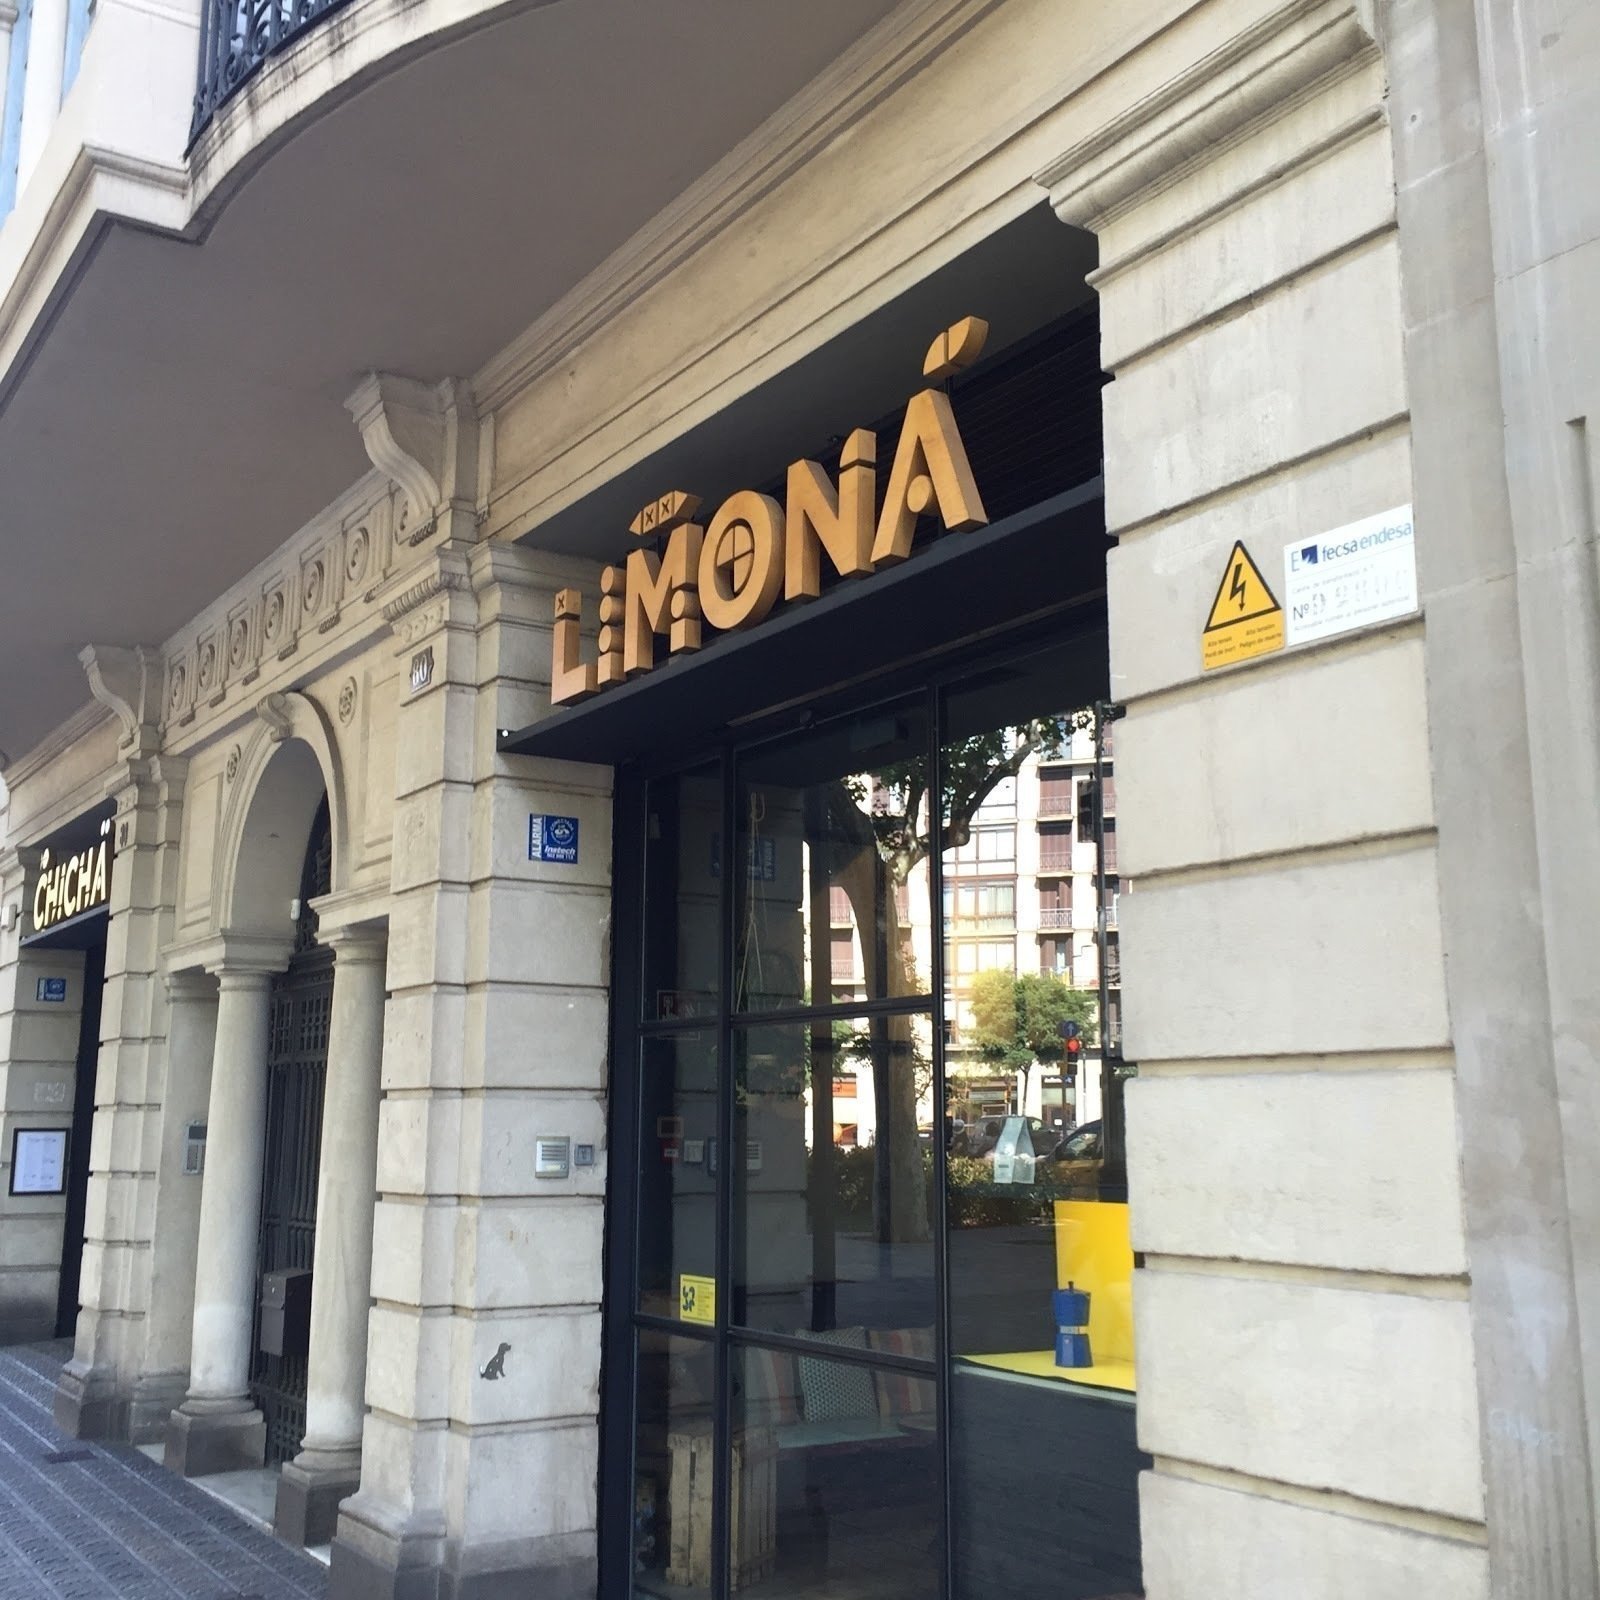 ChichaLimoná: A Work-Friendly Place in Barcelona